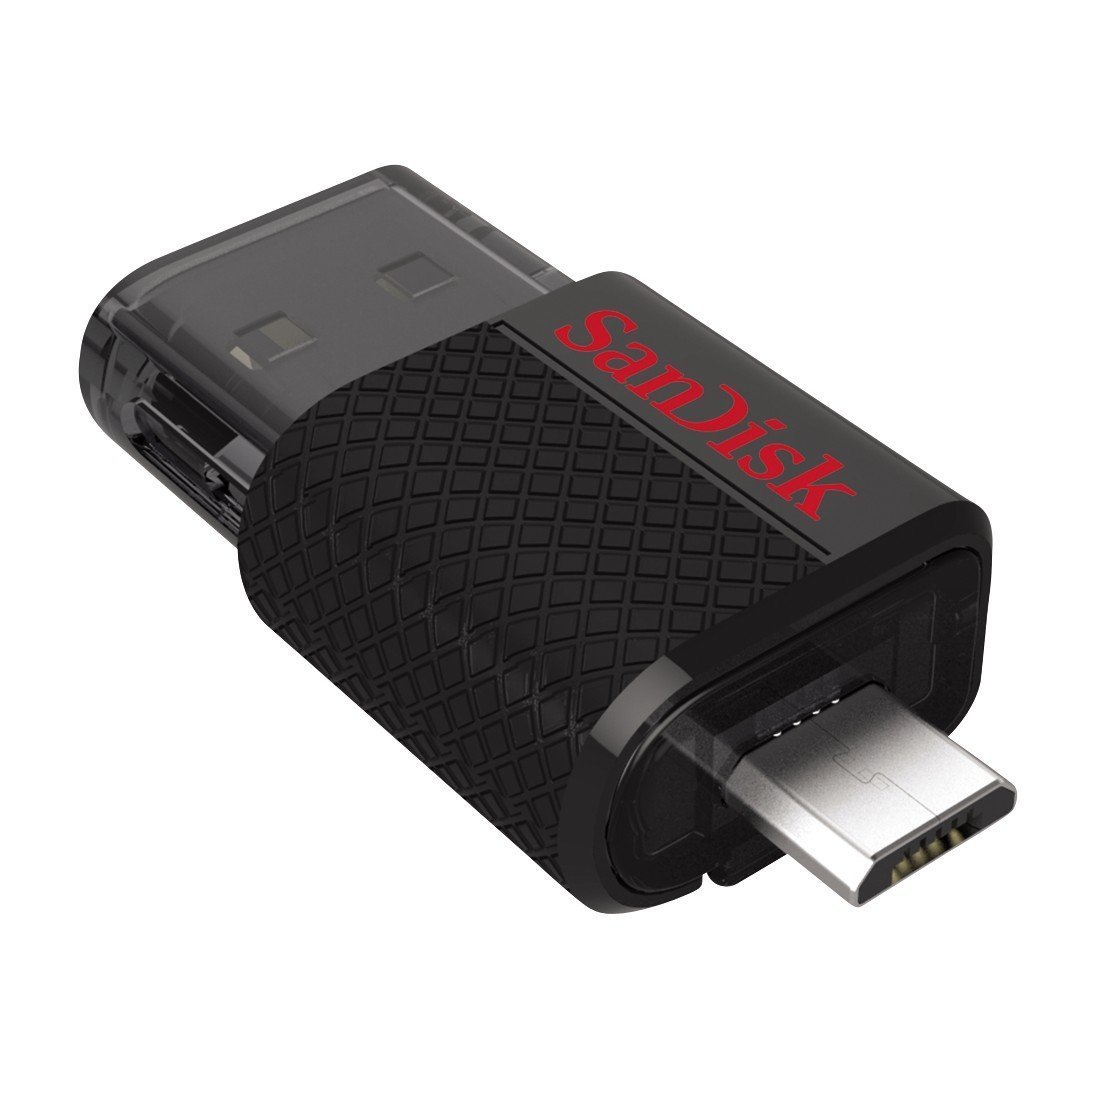 Sandisk 32 GB Ultra Dual Drive USB 3.0 Bellek (Android Uyumlu)